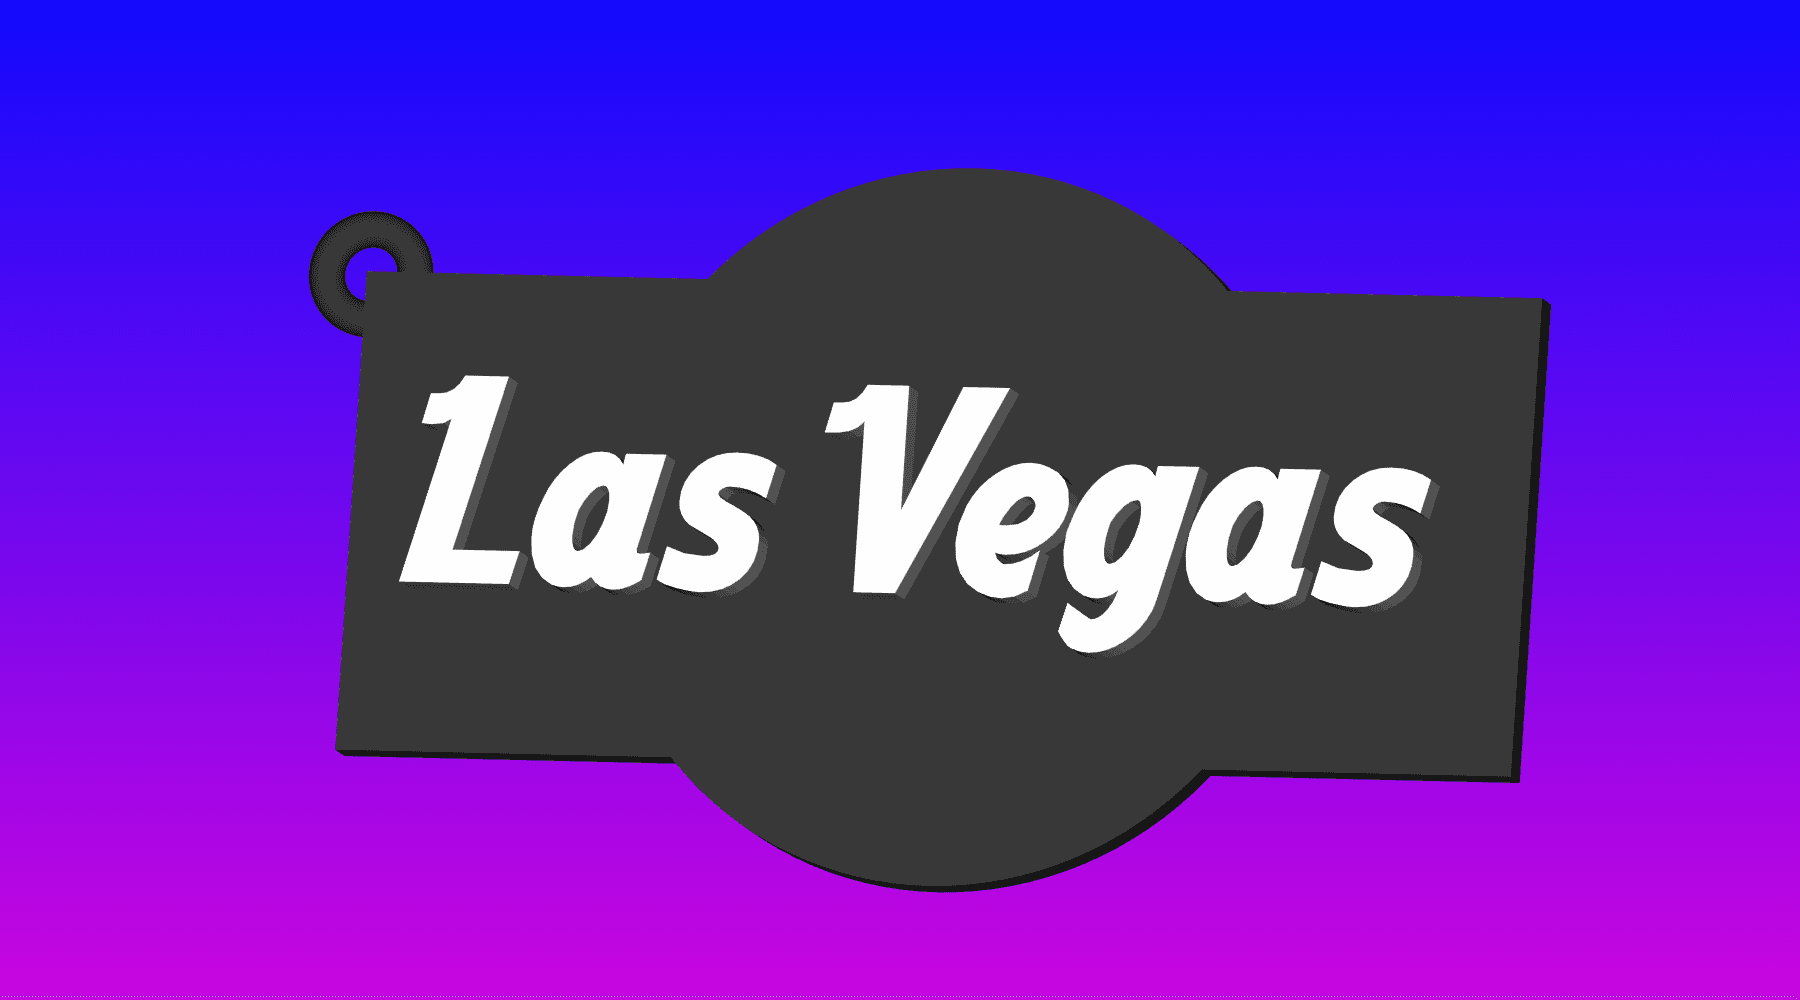 Hard Rock Cafe Las Vegas keychain, dogtag, earring 3d model